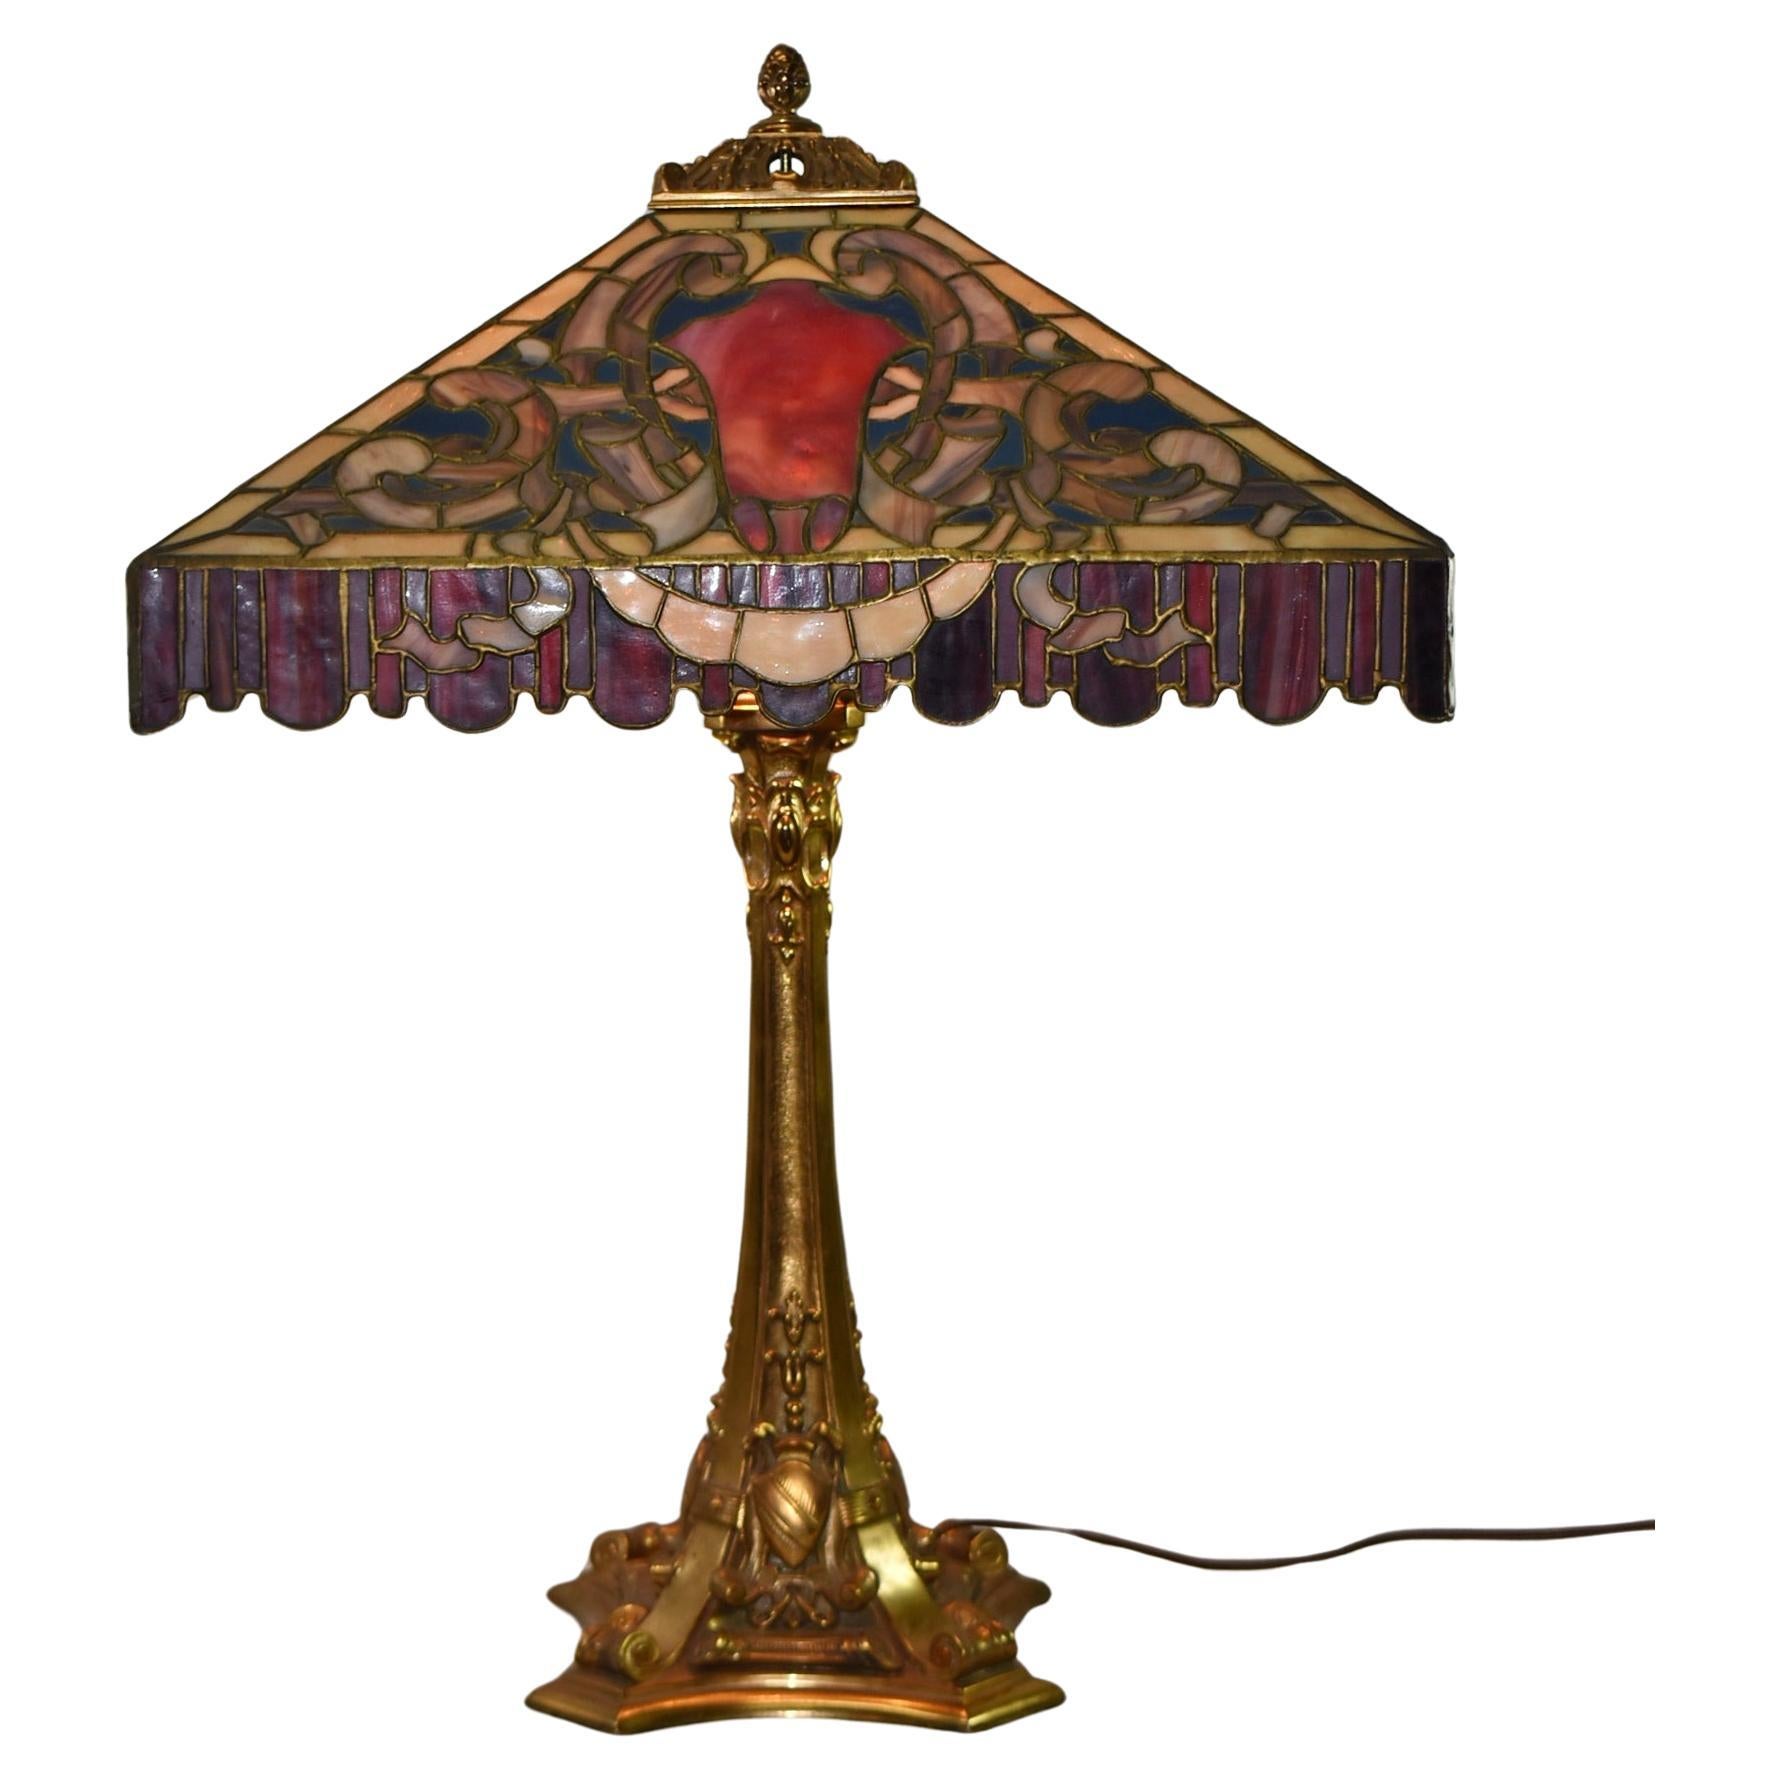 Tudor Table Lamps